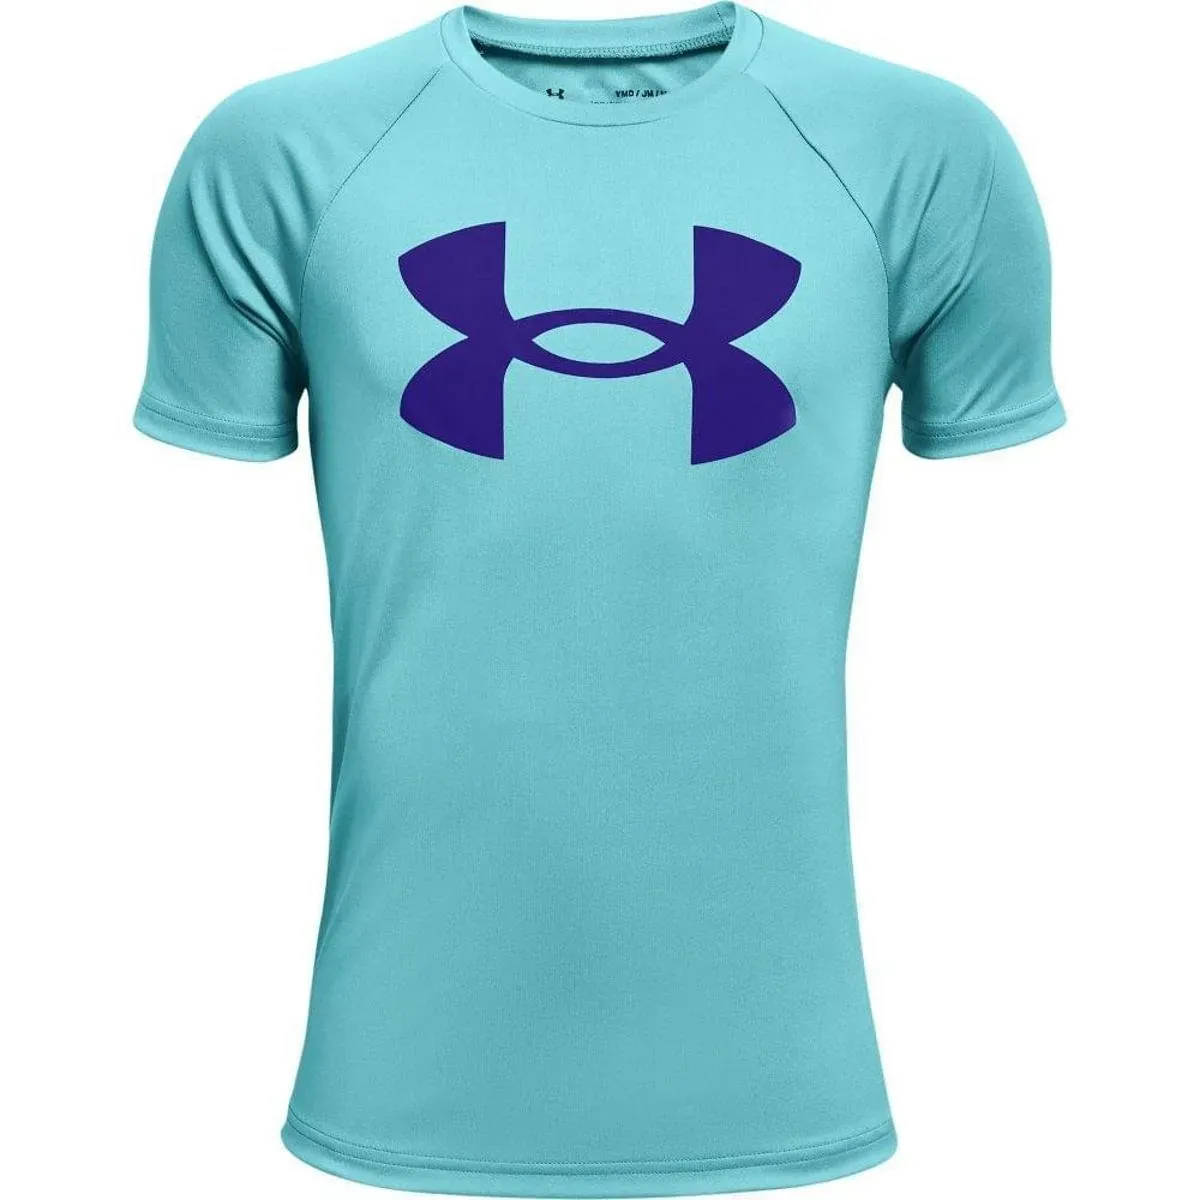 Camiseta Masculina Infantil Under Armour Tech Big Logo [tam.: Ep]